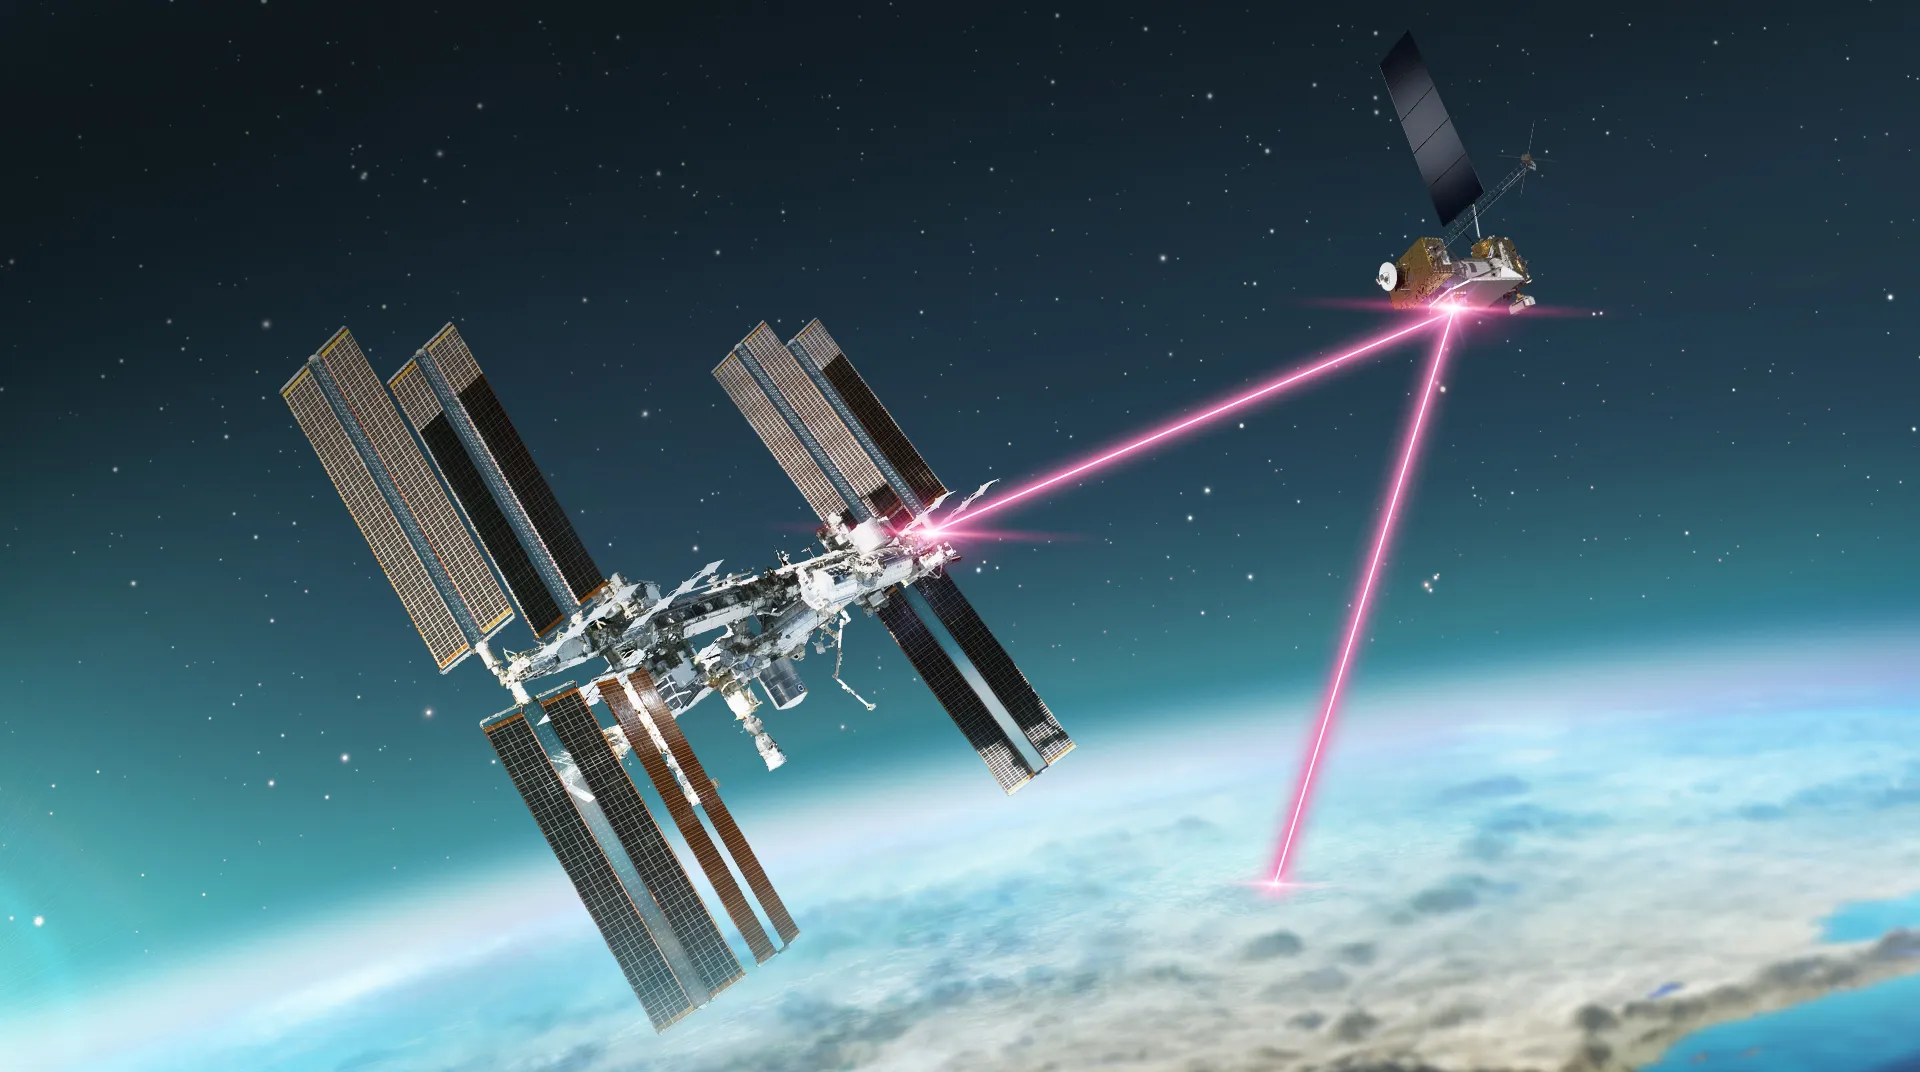 Zap! Groundbreaking laser flying to ISS soon